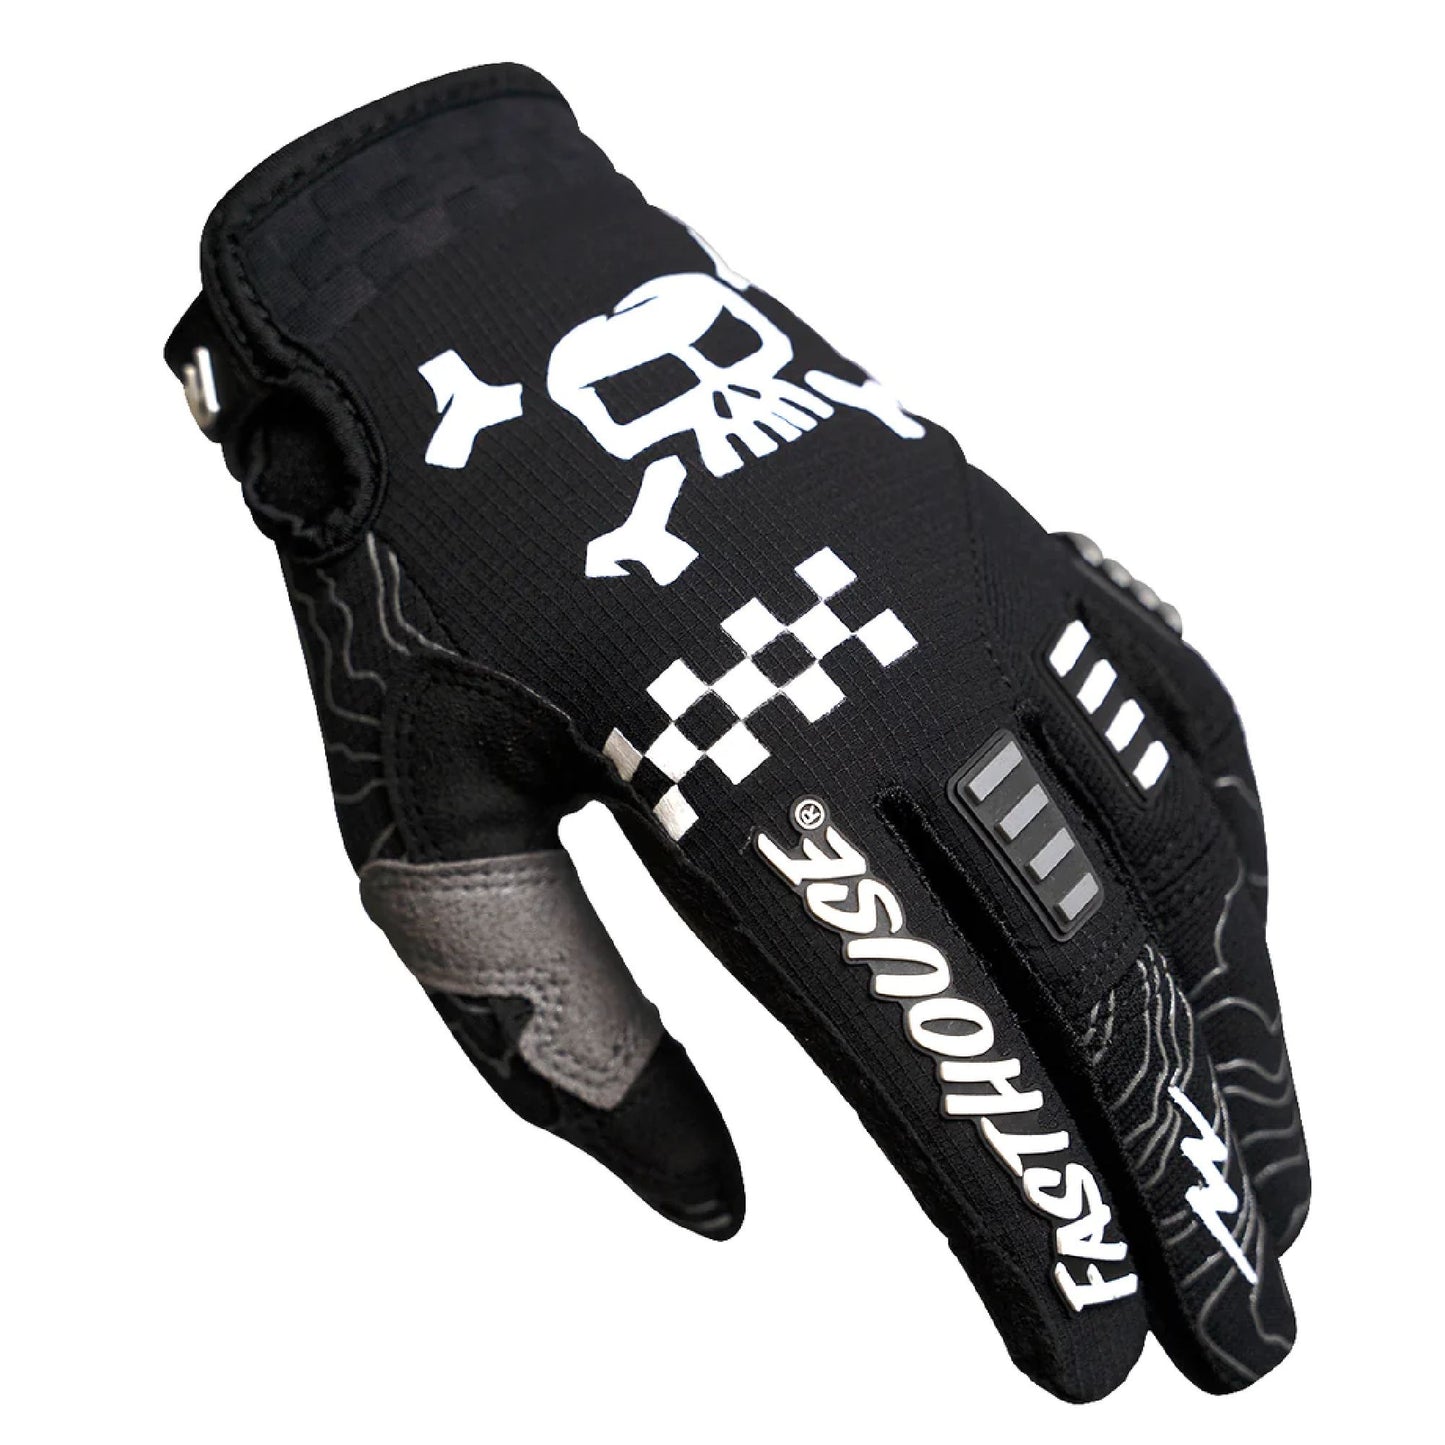 Fasthouse Off-Road Glove Black/White Bike Gloves